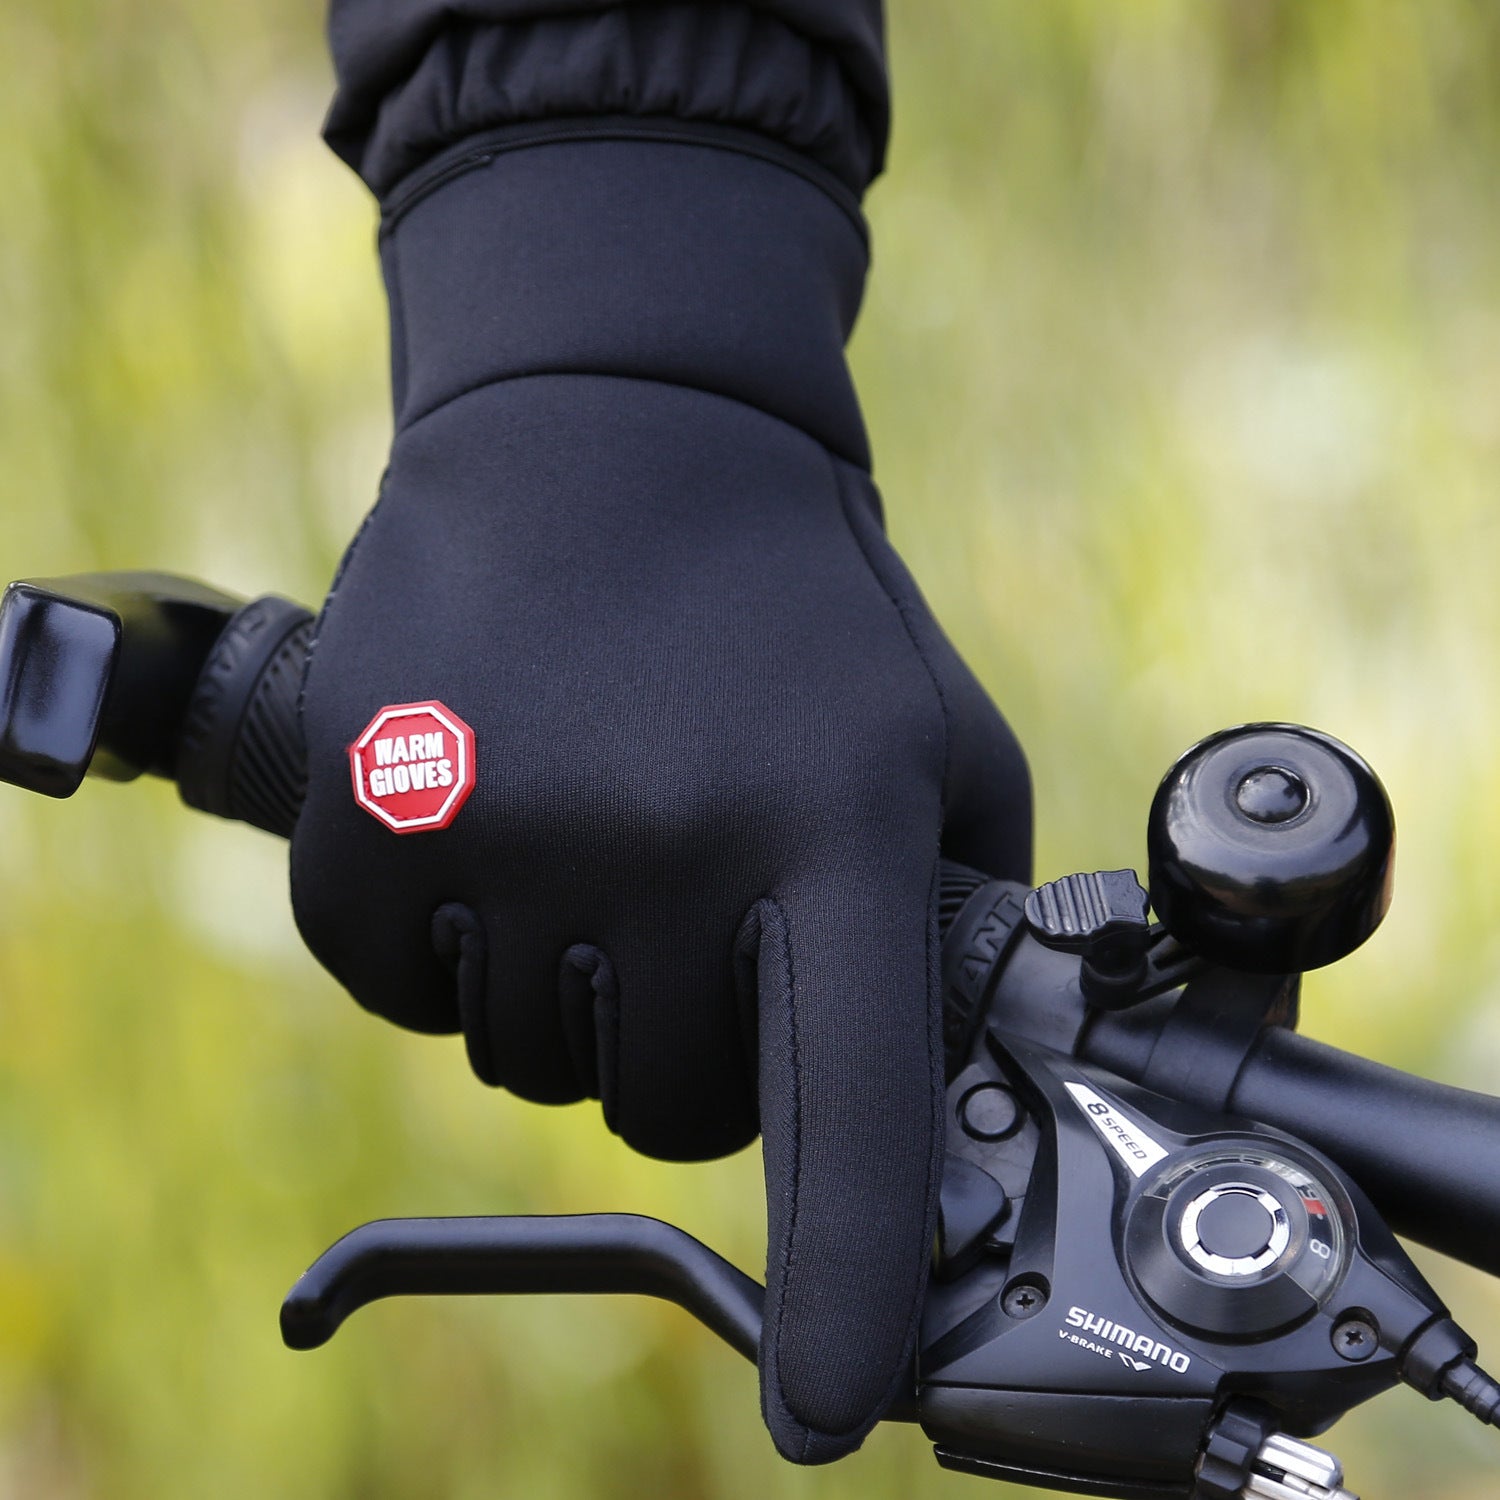 Autumn Winter Warm Cycling Gloves with Velvet - Black, S/M/L/XL Sizes, Split Finger Style - Farefe